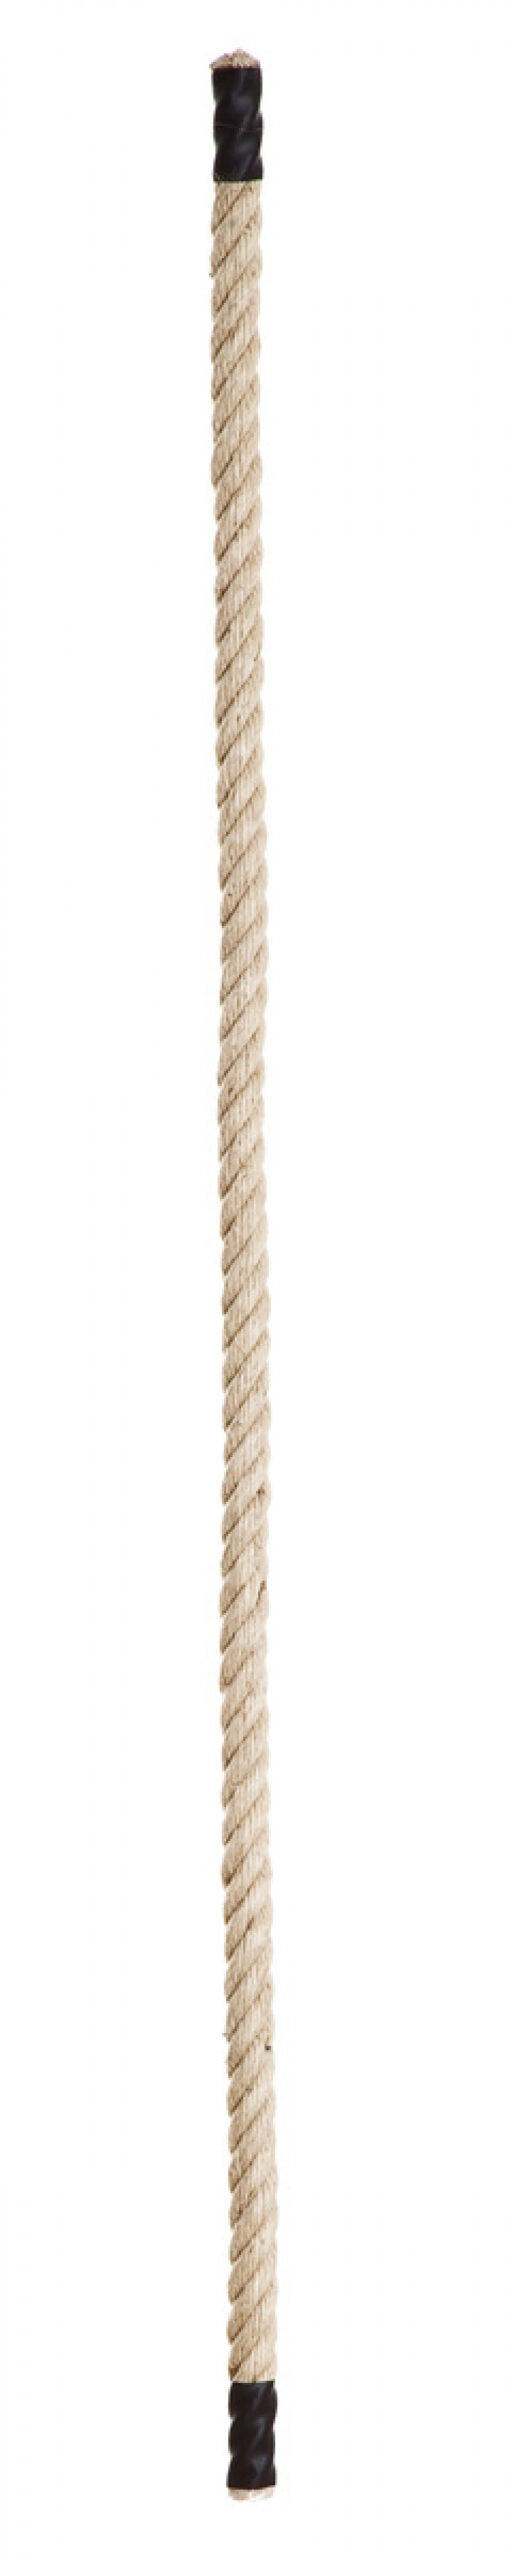 Tug-of-war rope